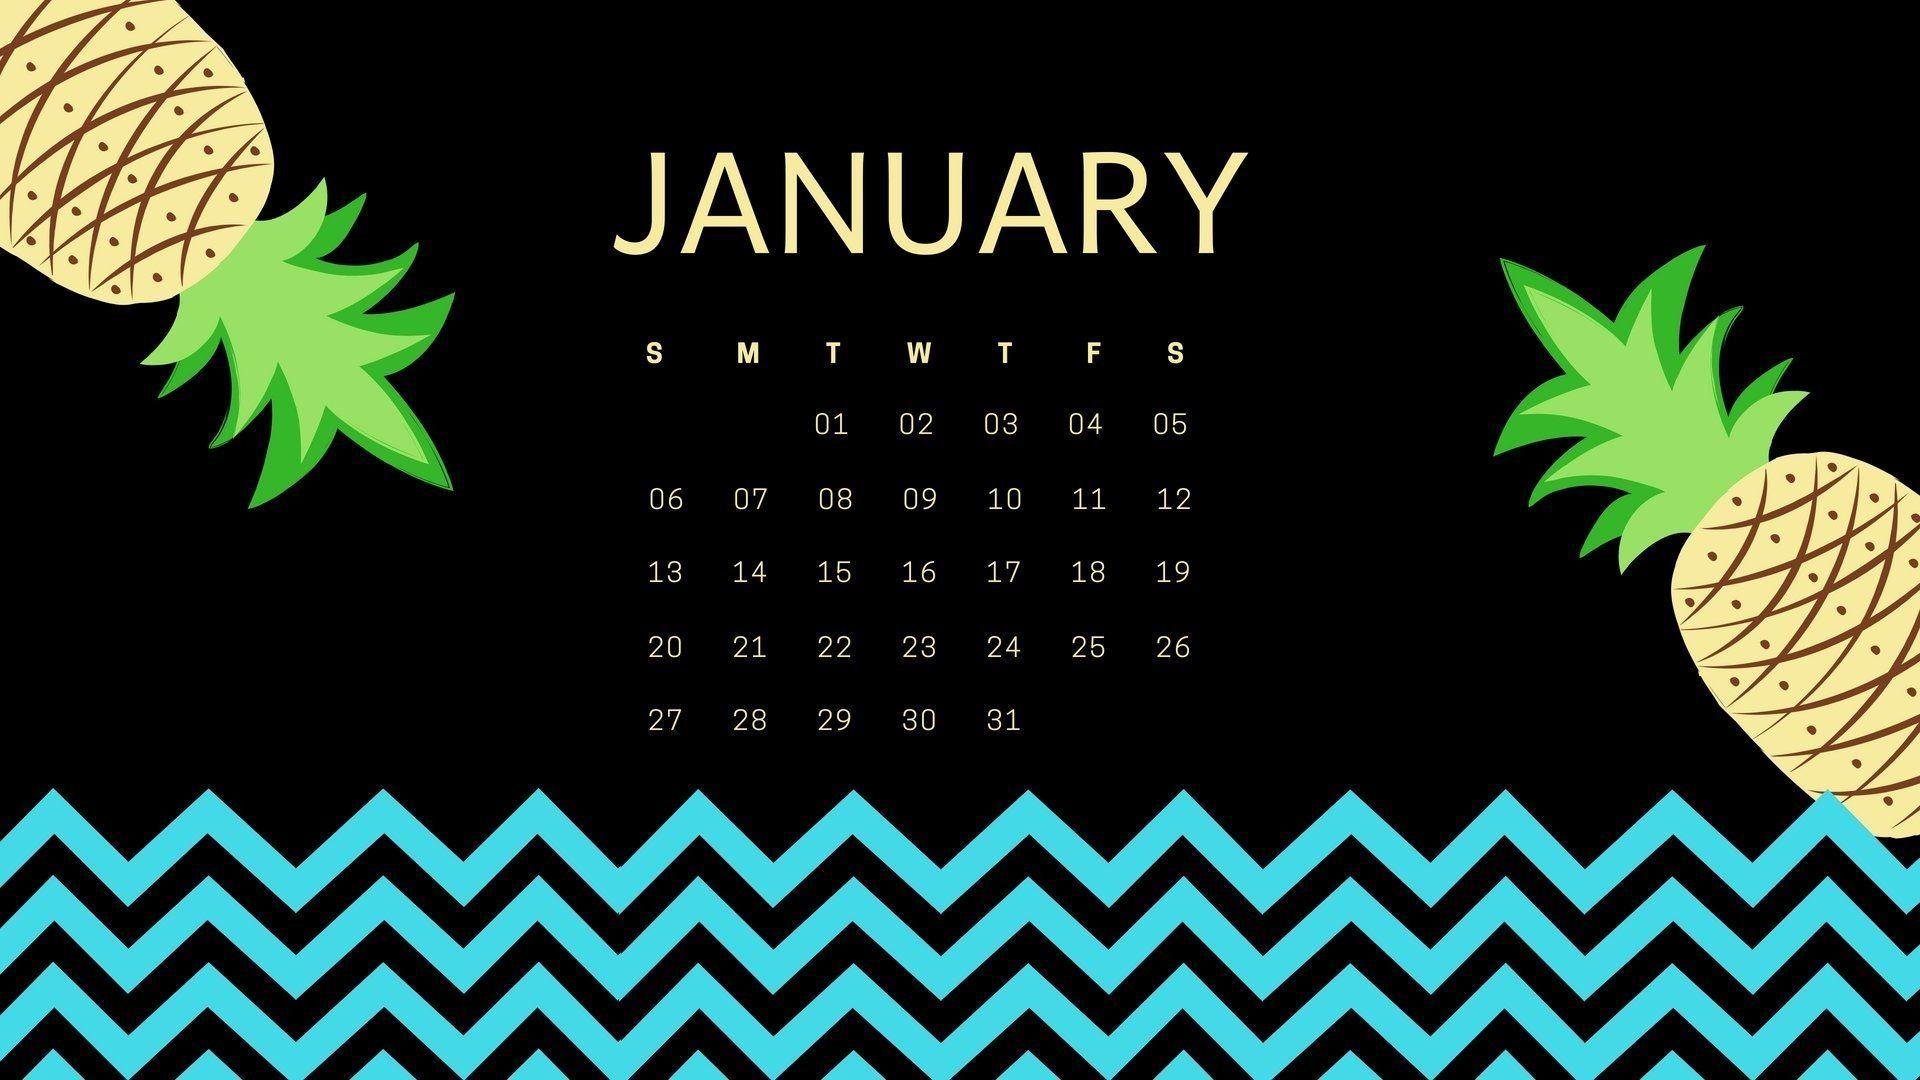 Cute January 2019 Calendar Floral WallPaper Flower Image Designs